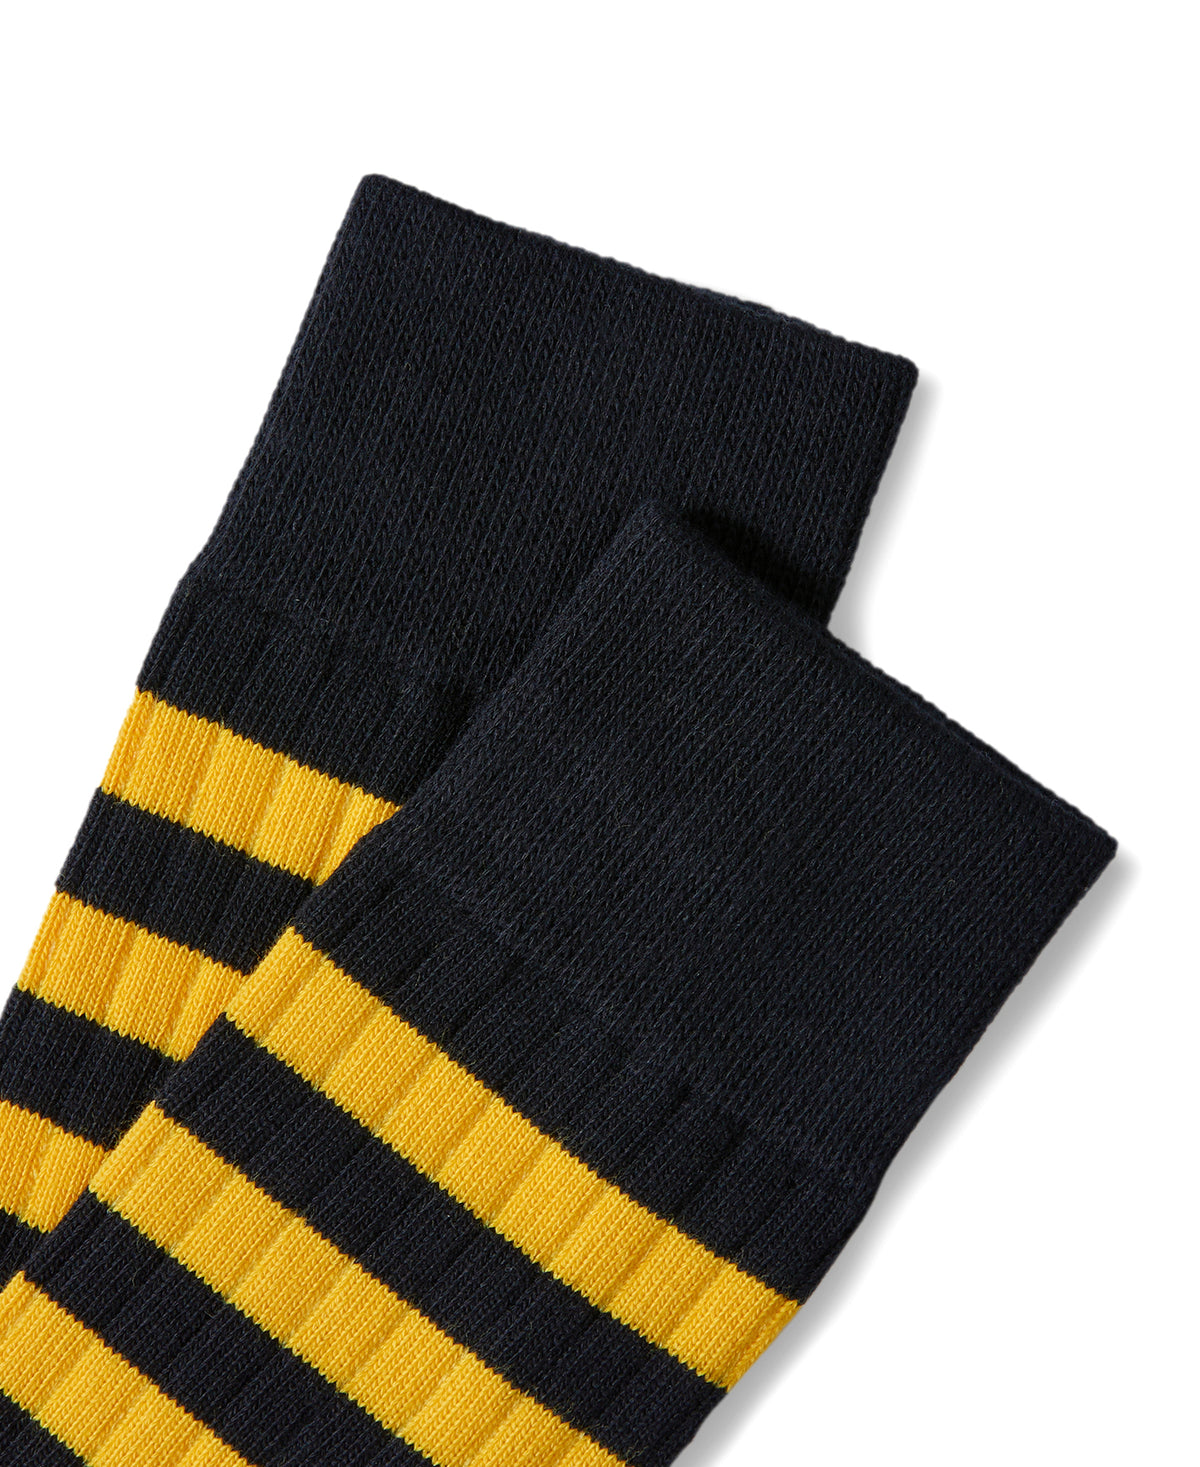 Retro Striped Cotton Socks - Black/Yellow